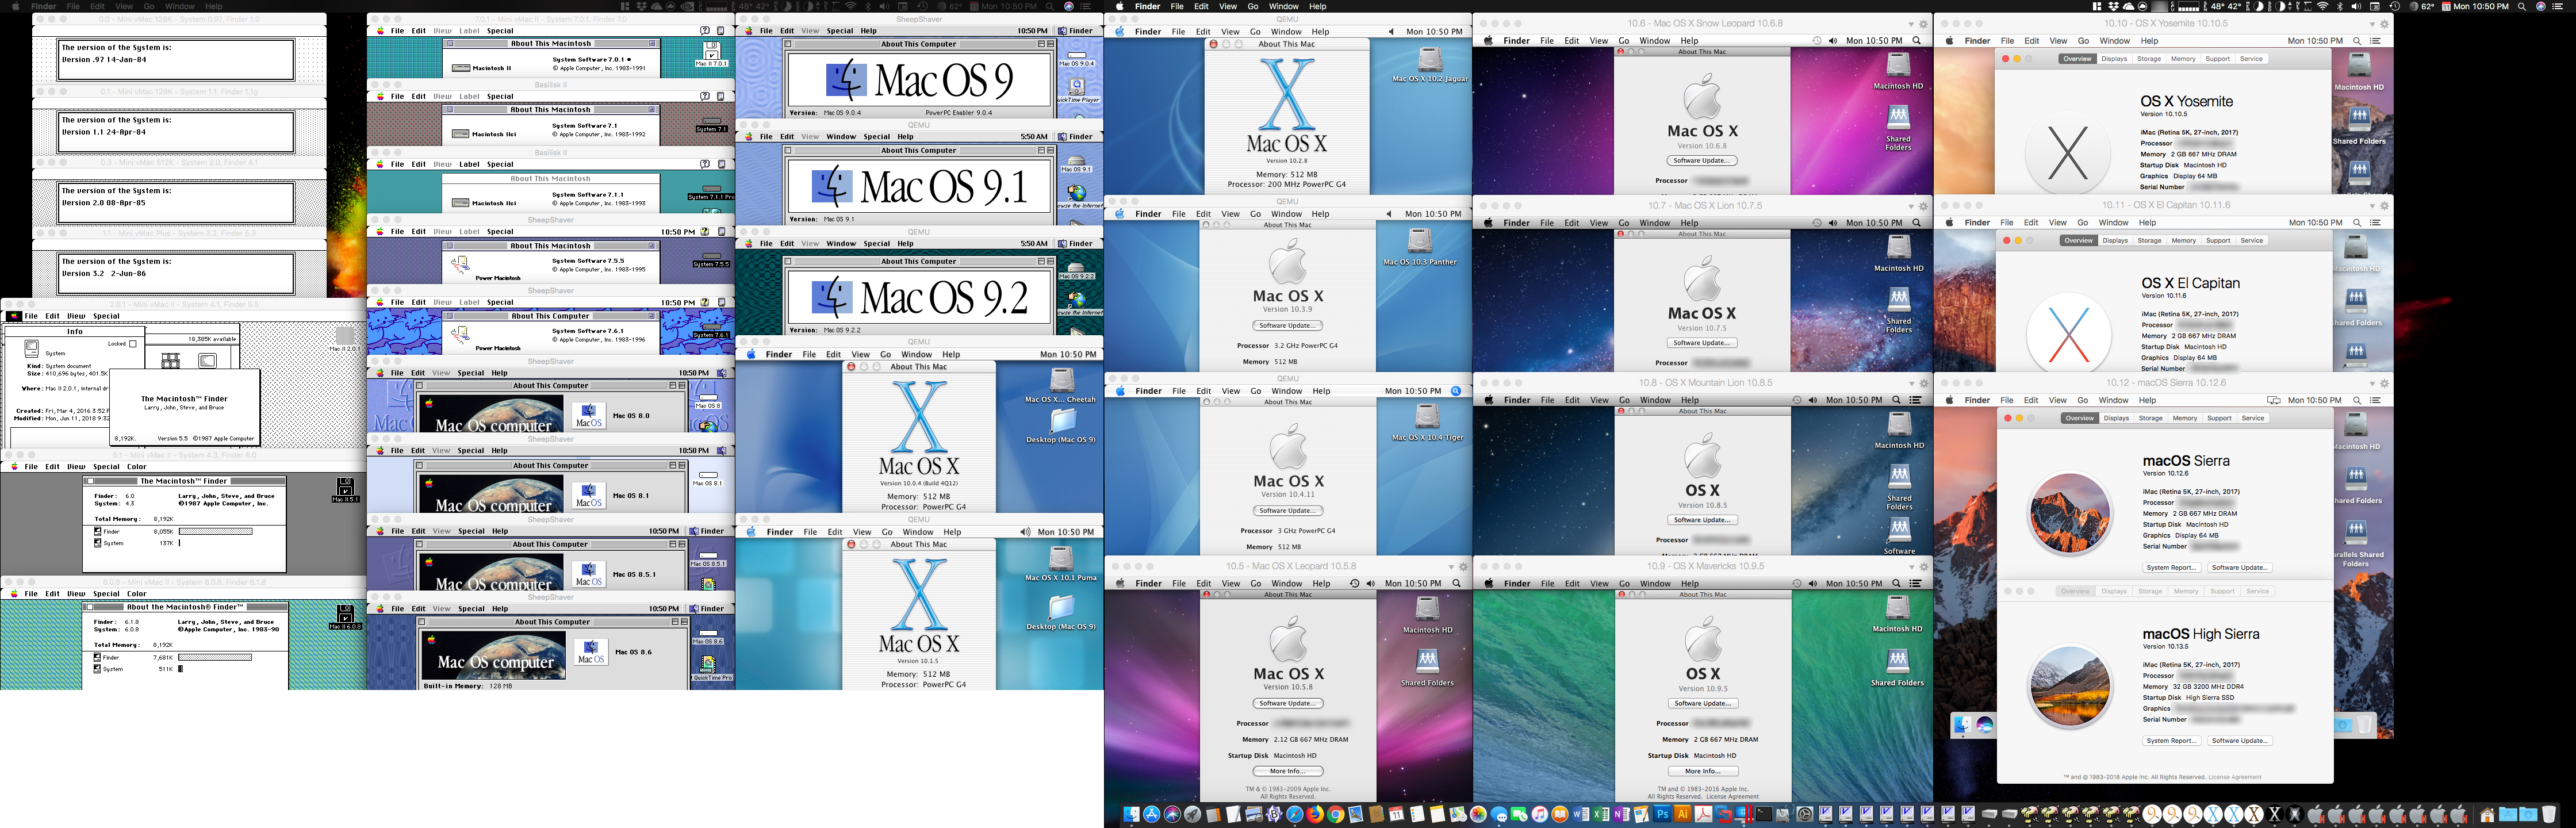 mac os 7.0.1 emulator on windows